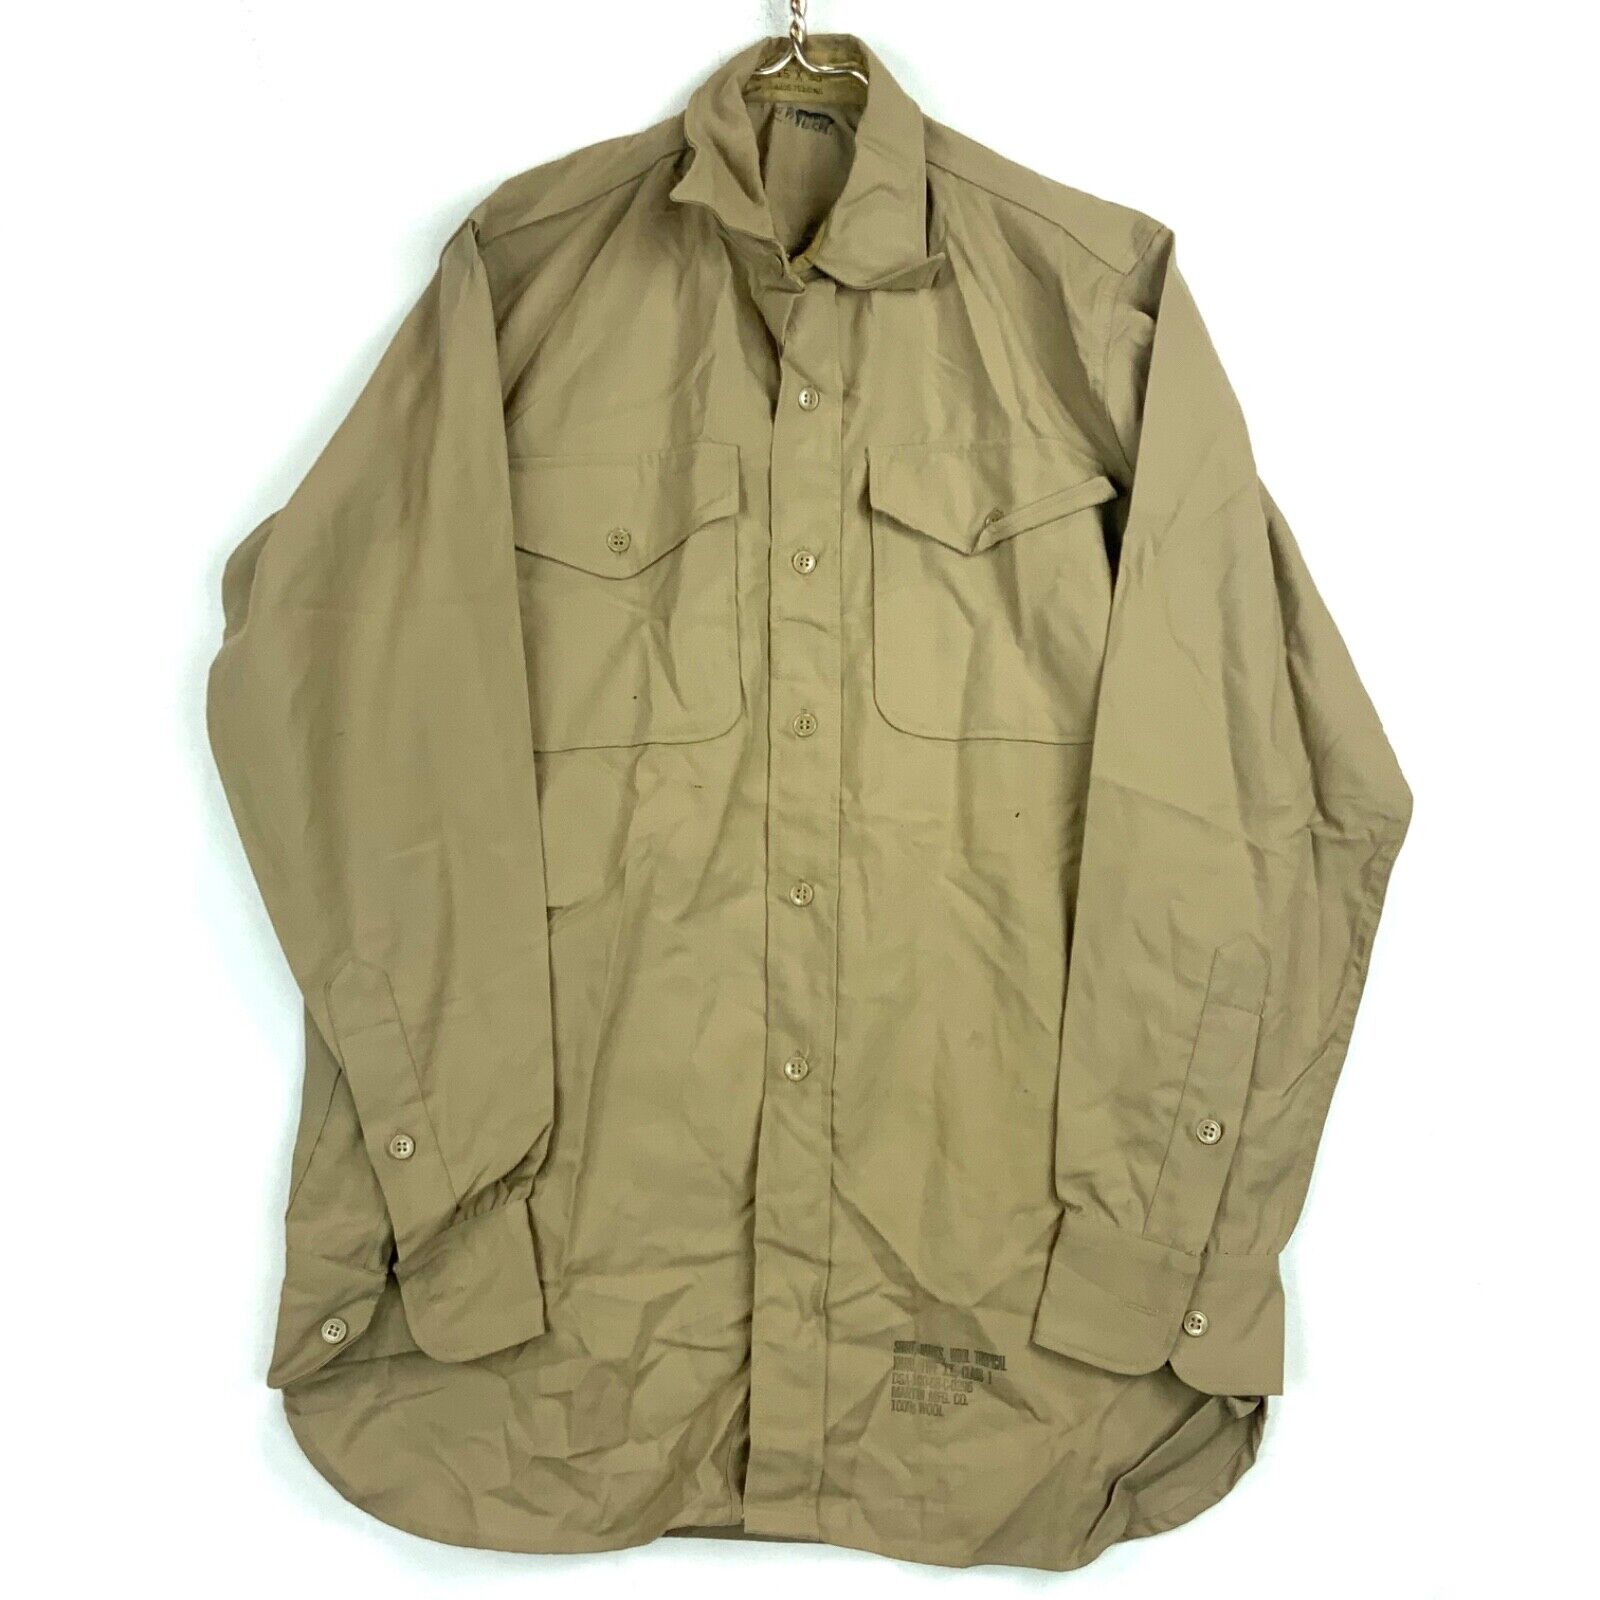 Vintage Us Type II Army Og-107 Button Up Shirt Size 15 x 33 Khaki Vietnam Era